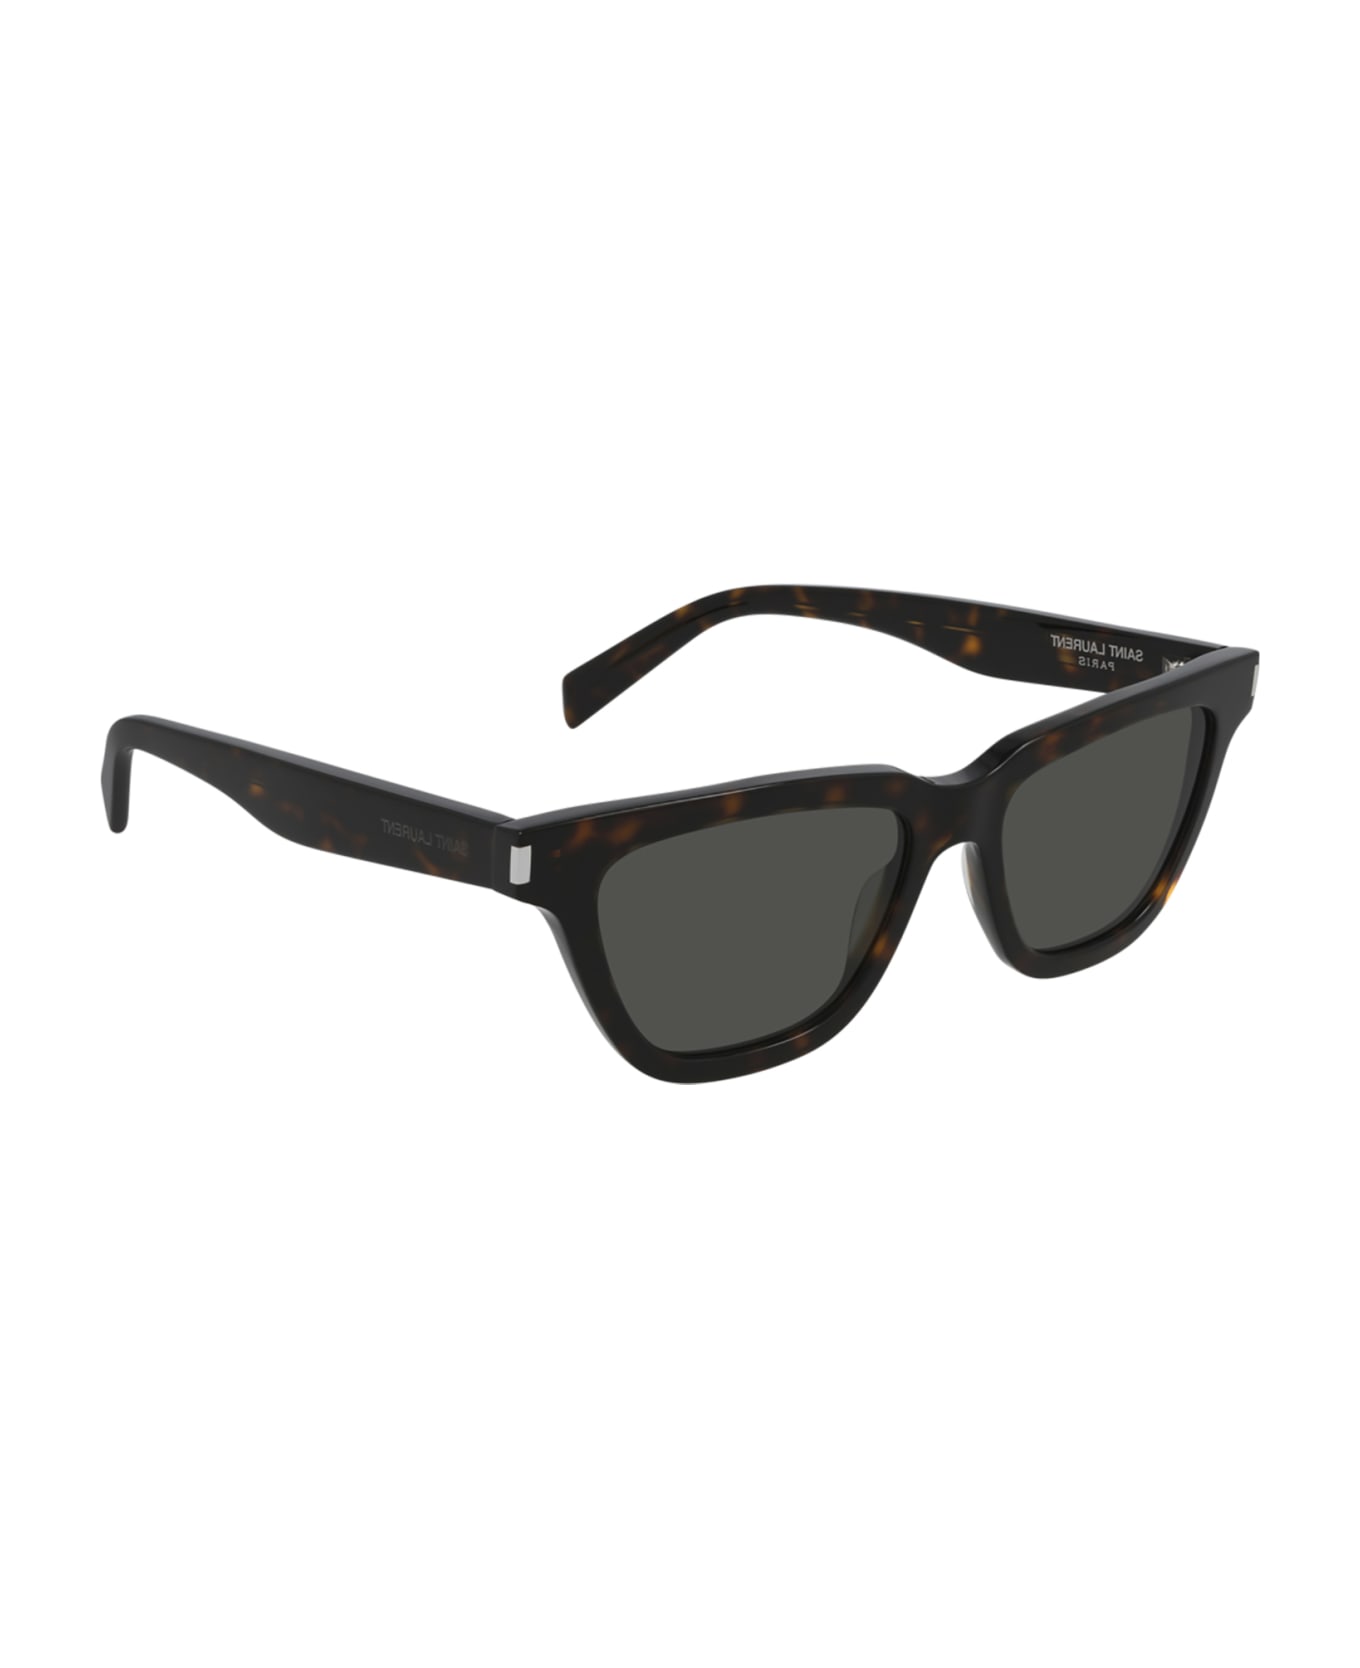 Saint Laurent Eyewear SL 462 SULPICE Sunglasses - Havana Havana Grey